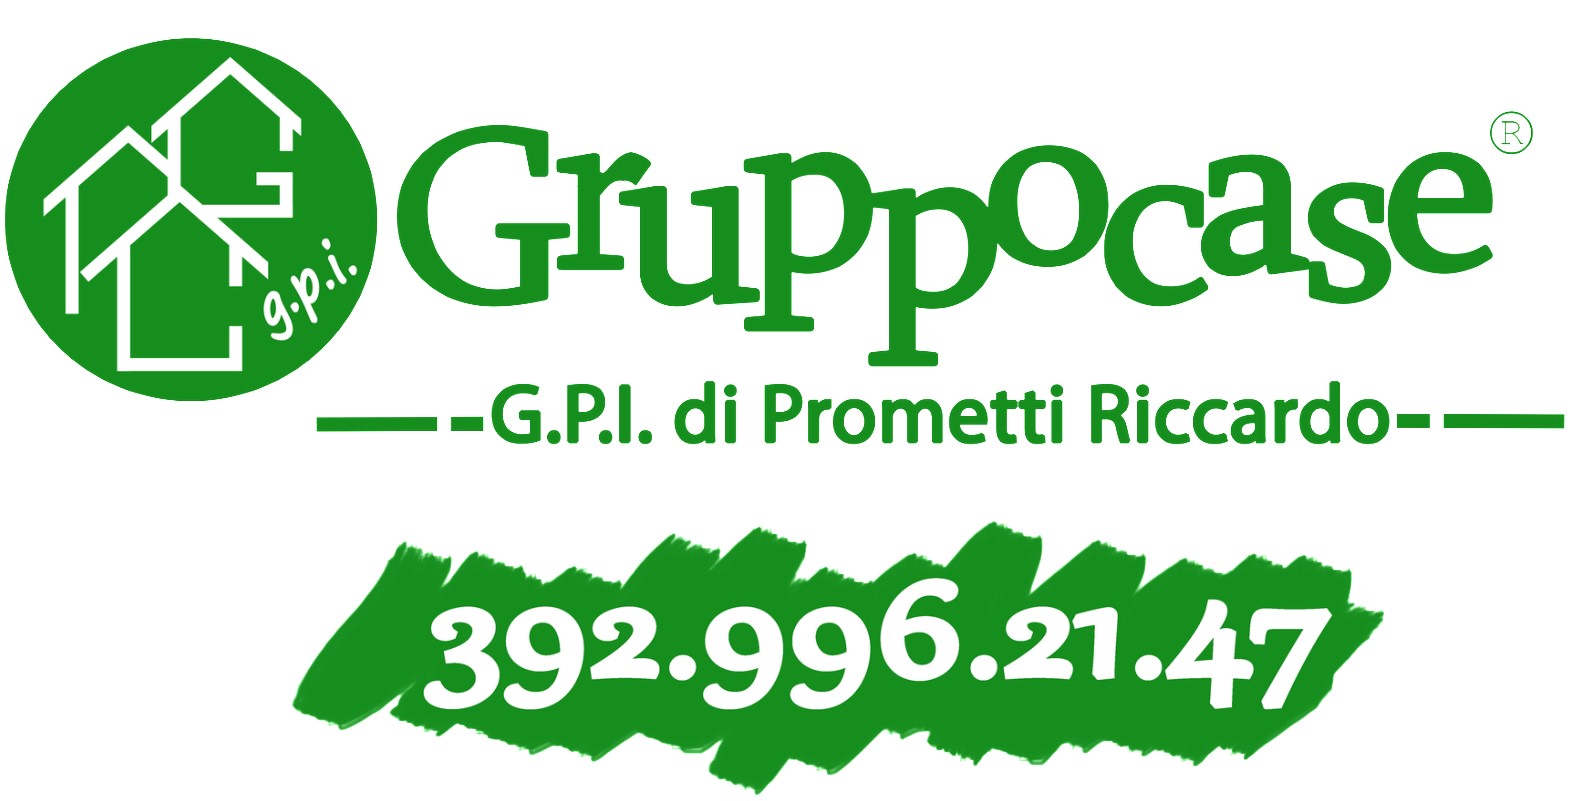 Sponsor GRUPPOCASE - G.P.I. di Prometti Riccardo